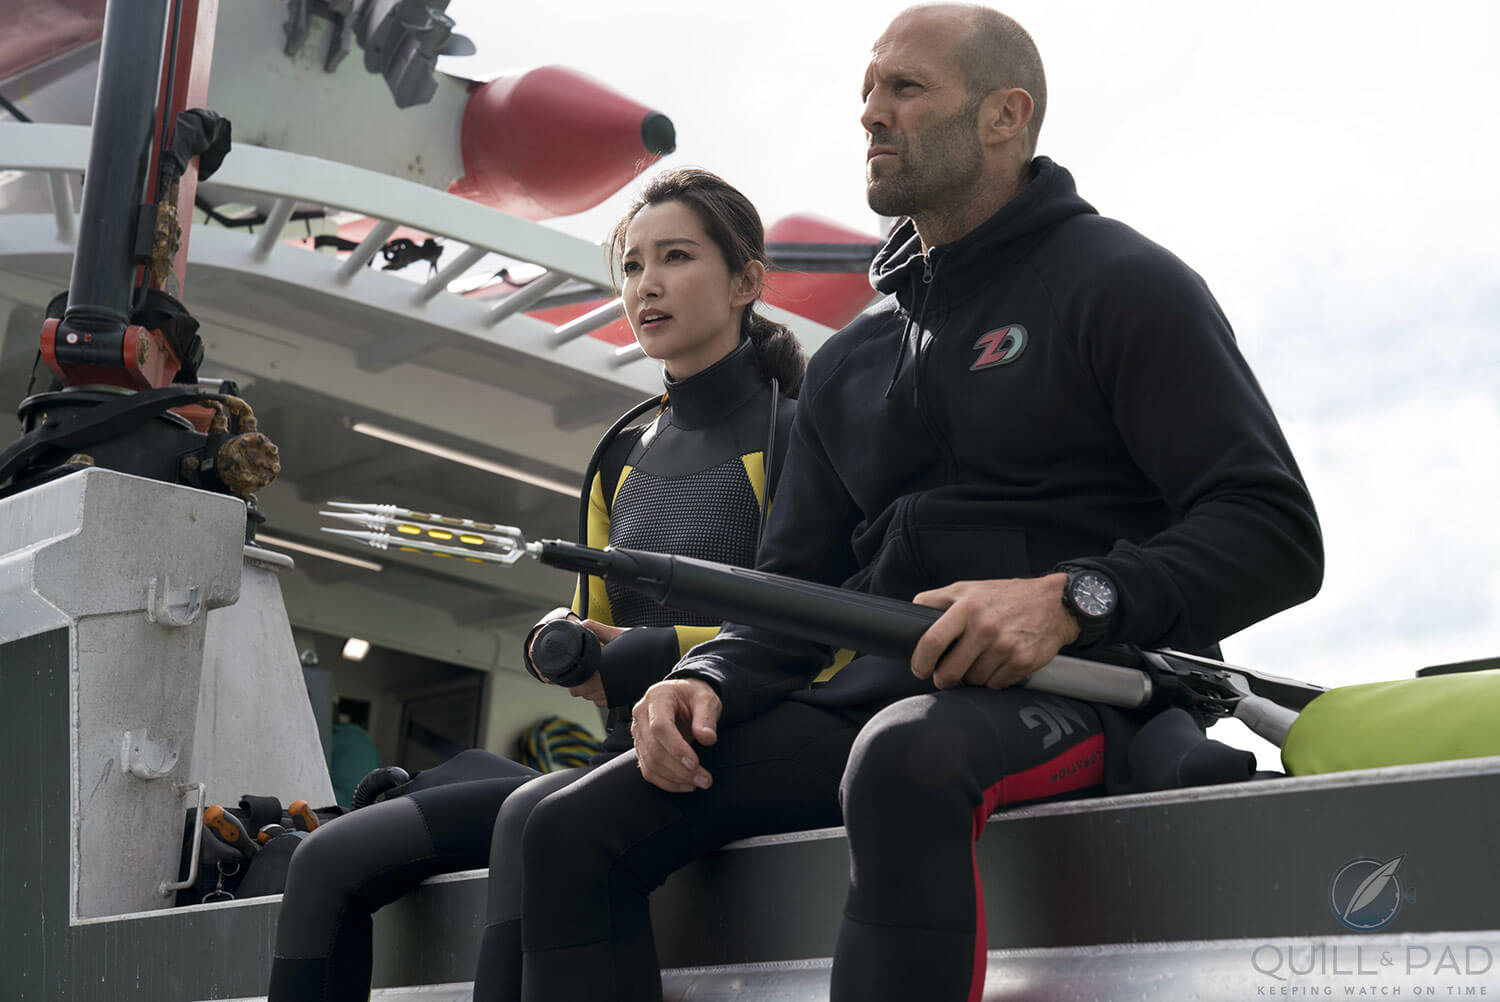 Jason Statham on set filming The Meg wearing an IWC Aquatimer Chronograph Edition La Cumbre Volcano